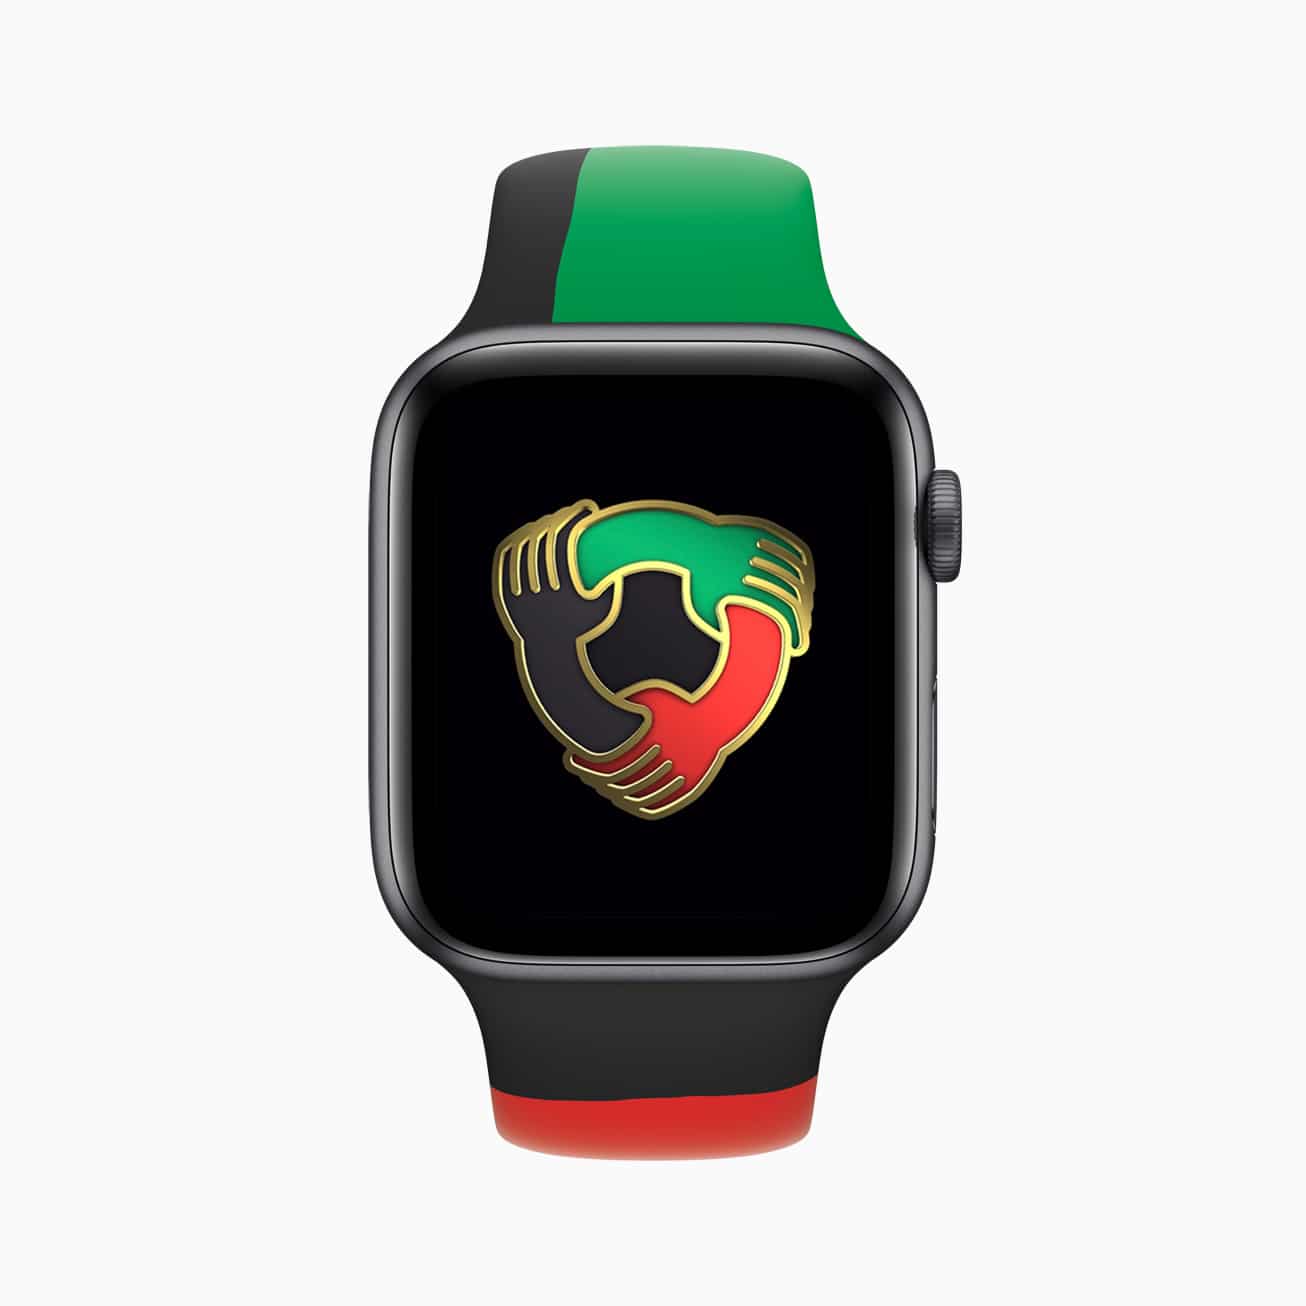 Apple watch Series 6 Black Unity Edition